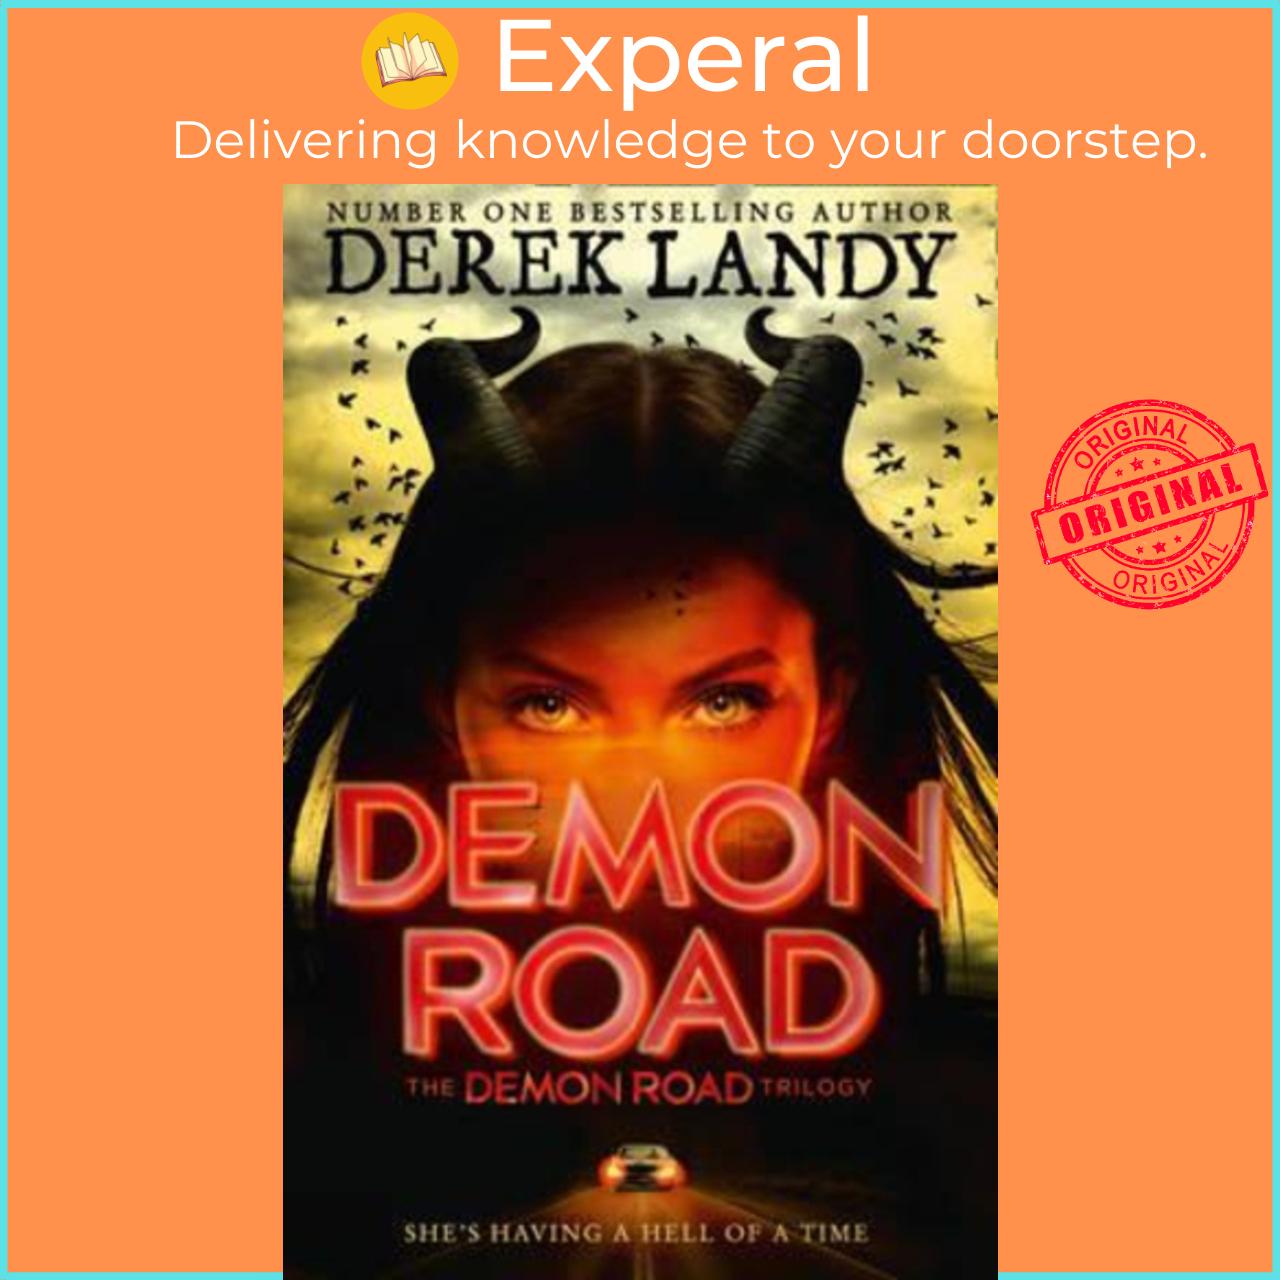 Sách - Demon Road by Derek Landy (UK edition, paperback)